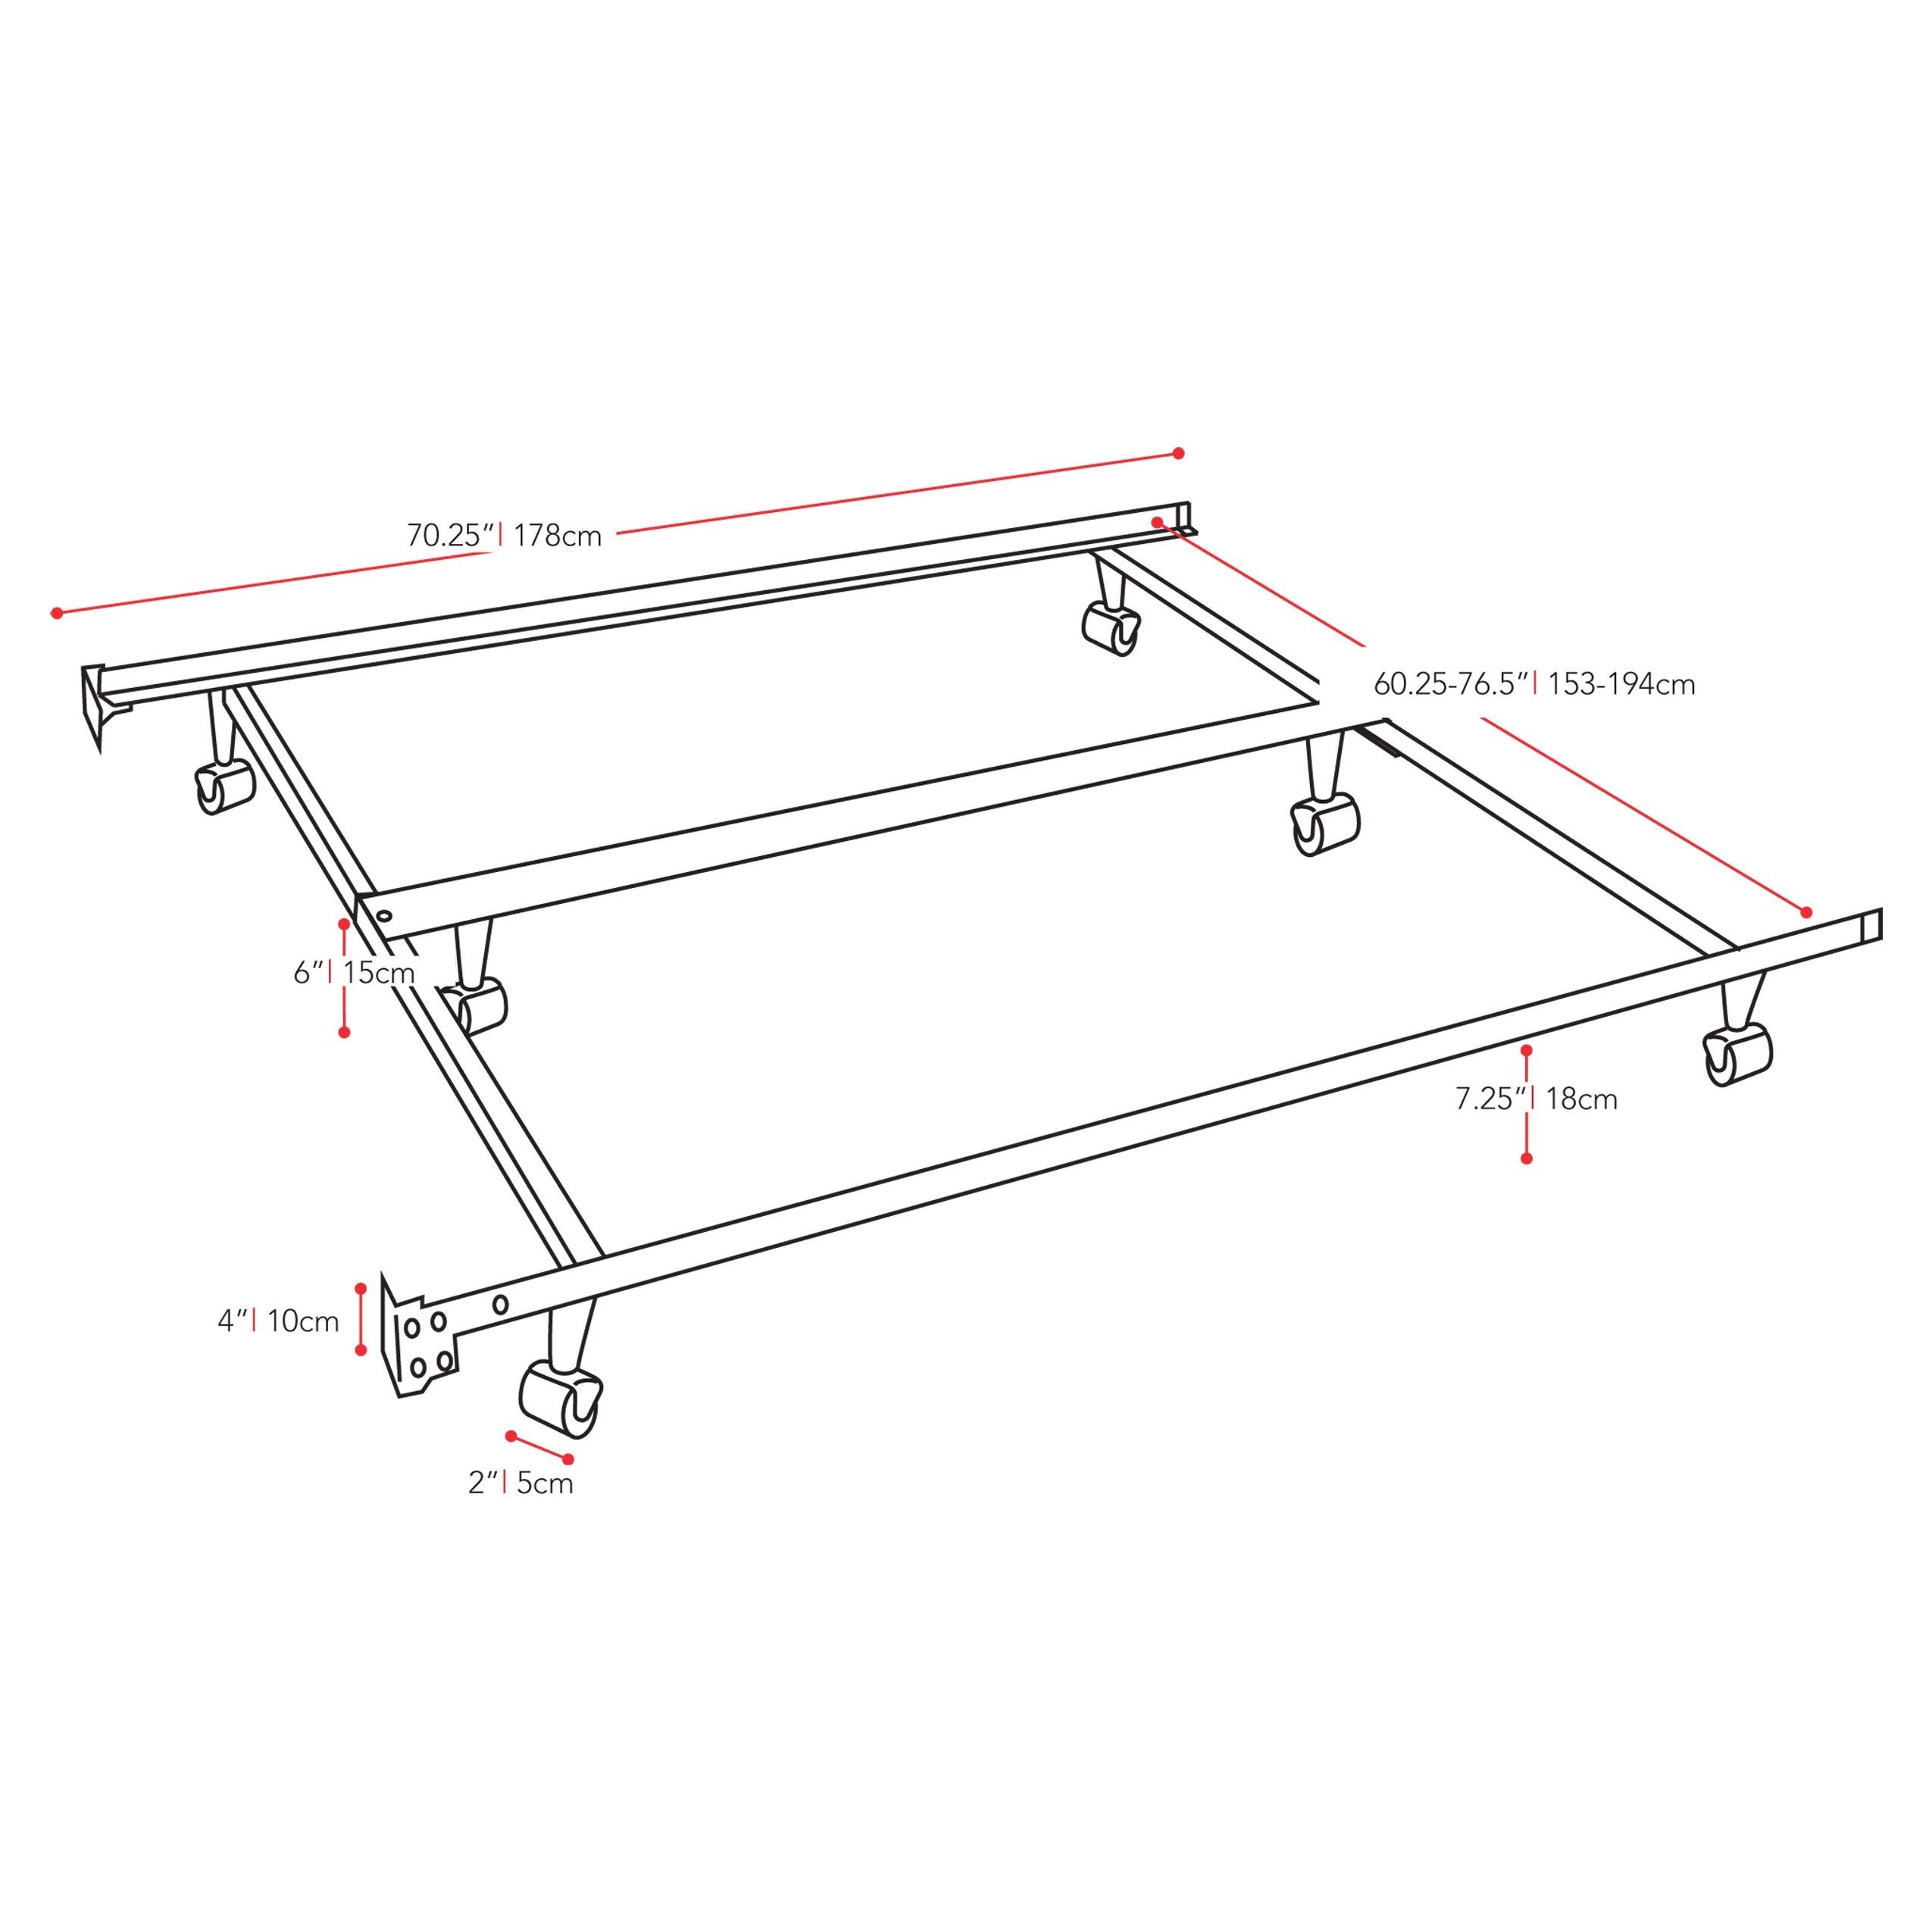 Adjustable Metal Bed Frame, Queen / King measurements diagram by CorLiving